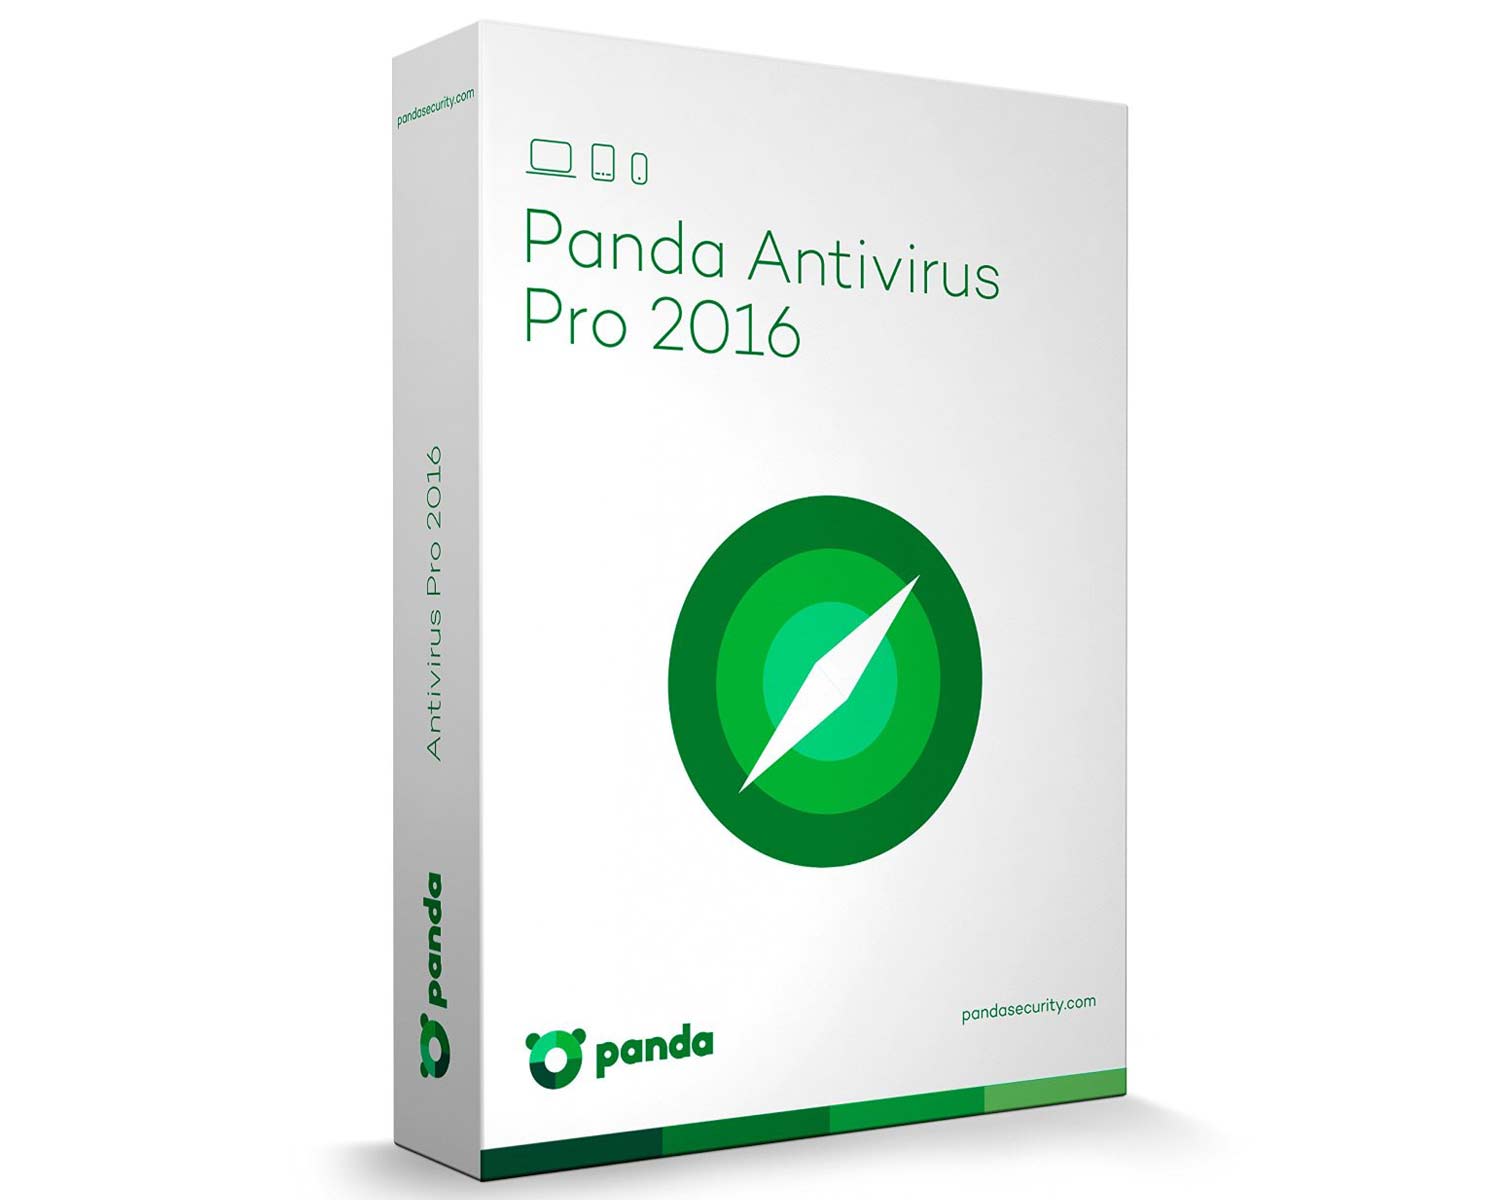 panda antivirus pro 2016 kopen